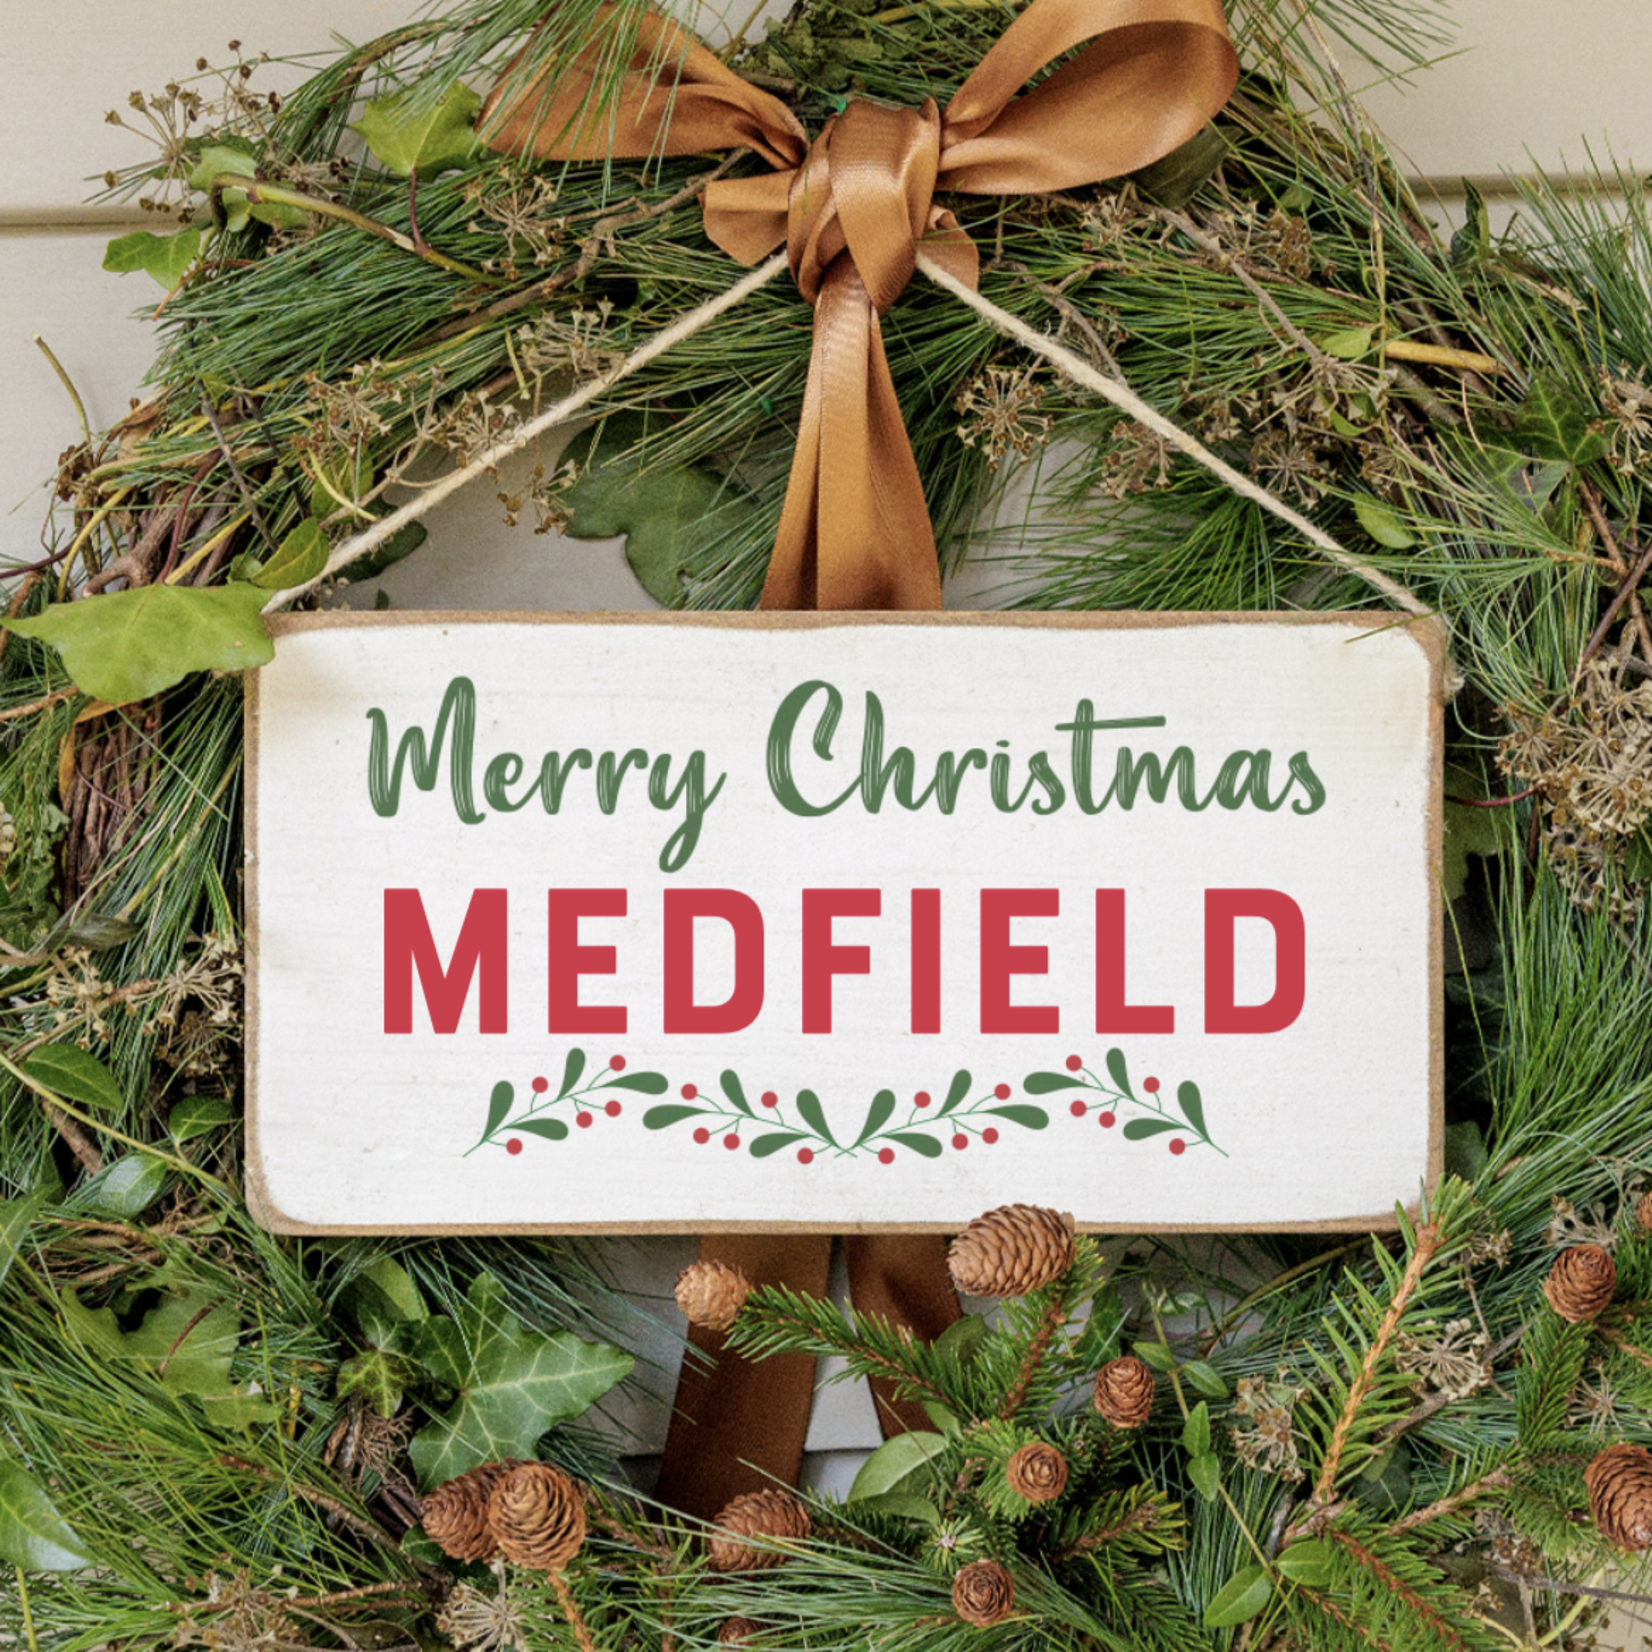 Rustic Marlin Rustic Marlin - Twine Hanging Sign - Medfield Merry Christmas